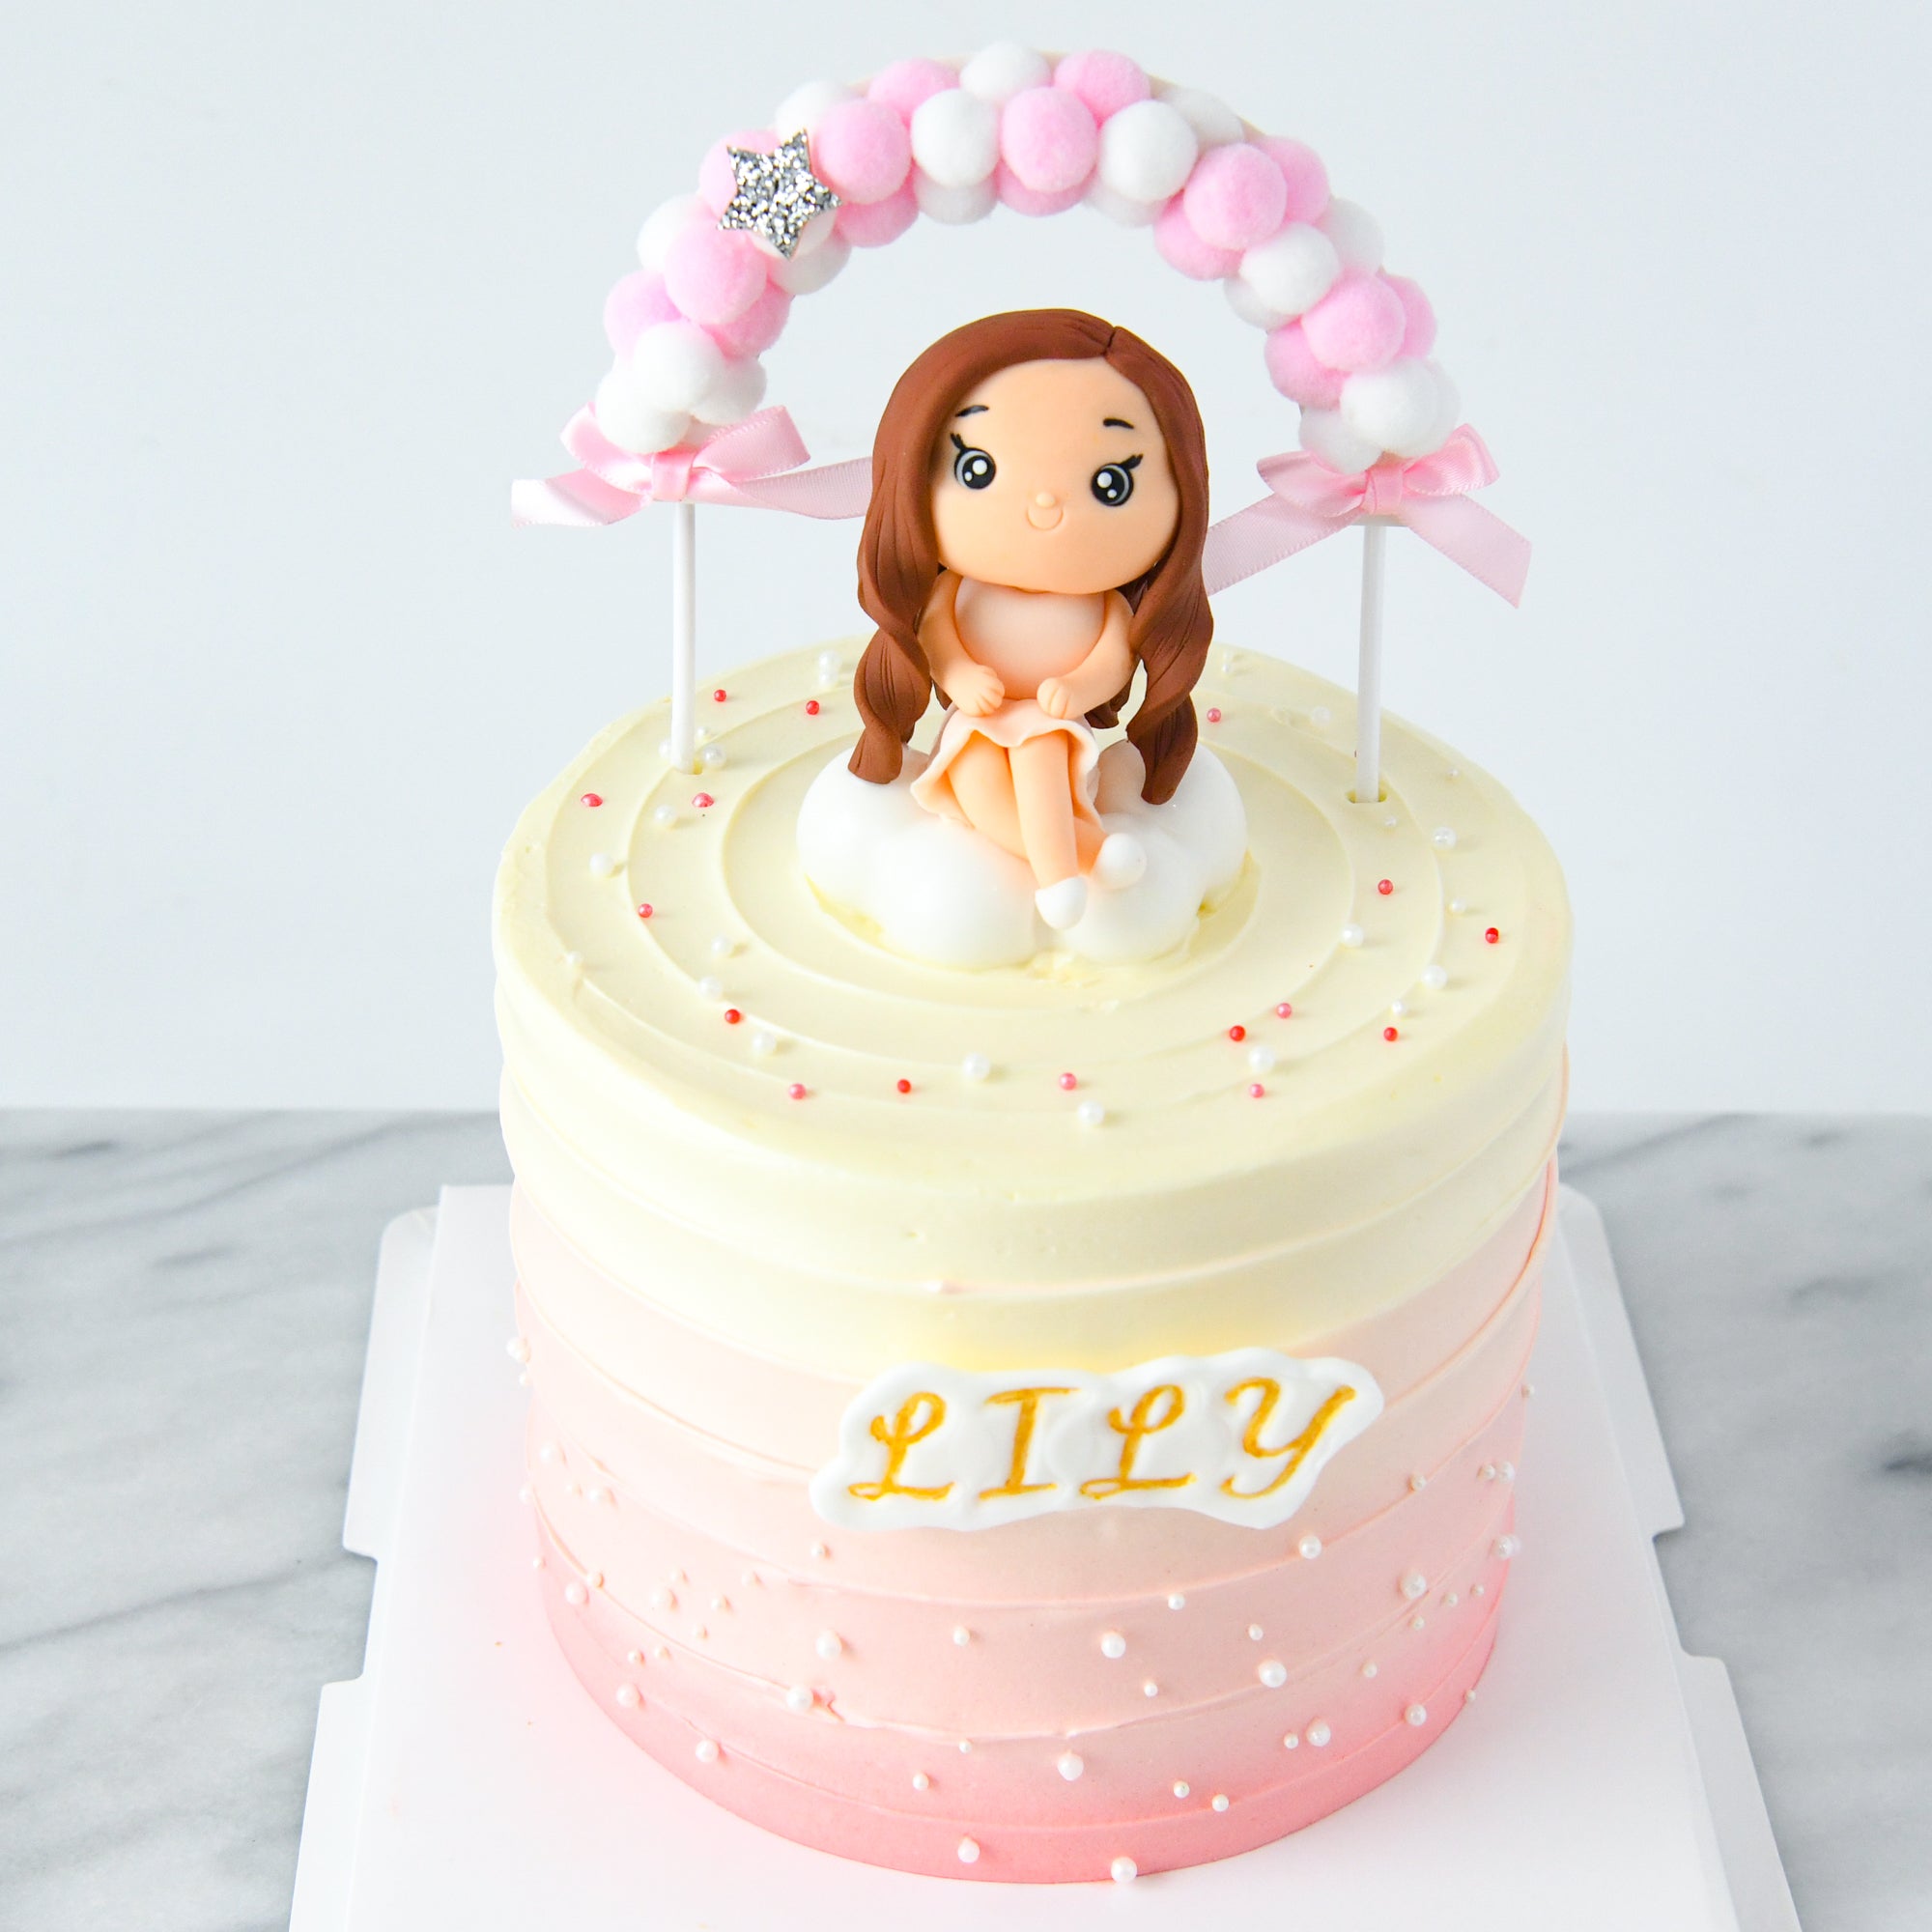 Girl with balloons cake - Picture of The House Of Cakes Bakery Dubai -  Tripadvisor